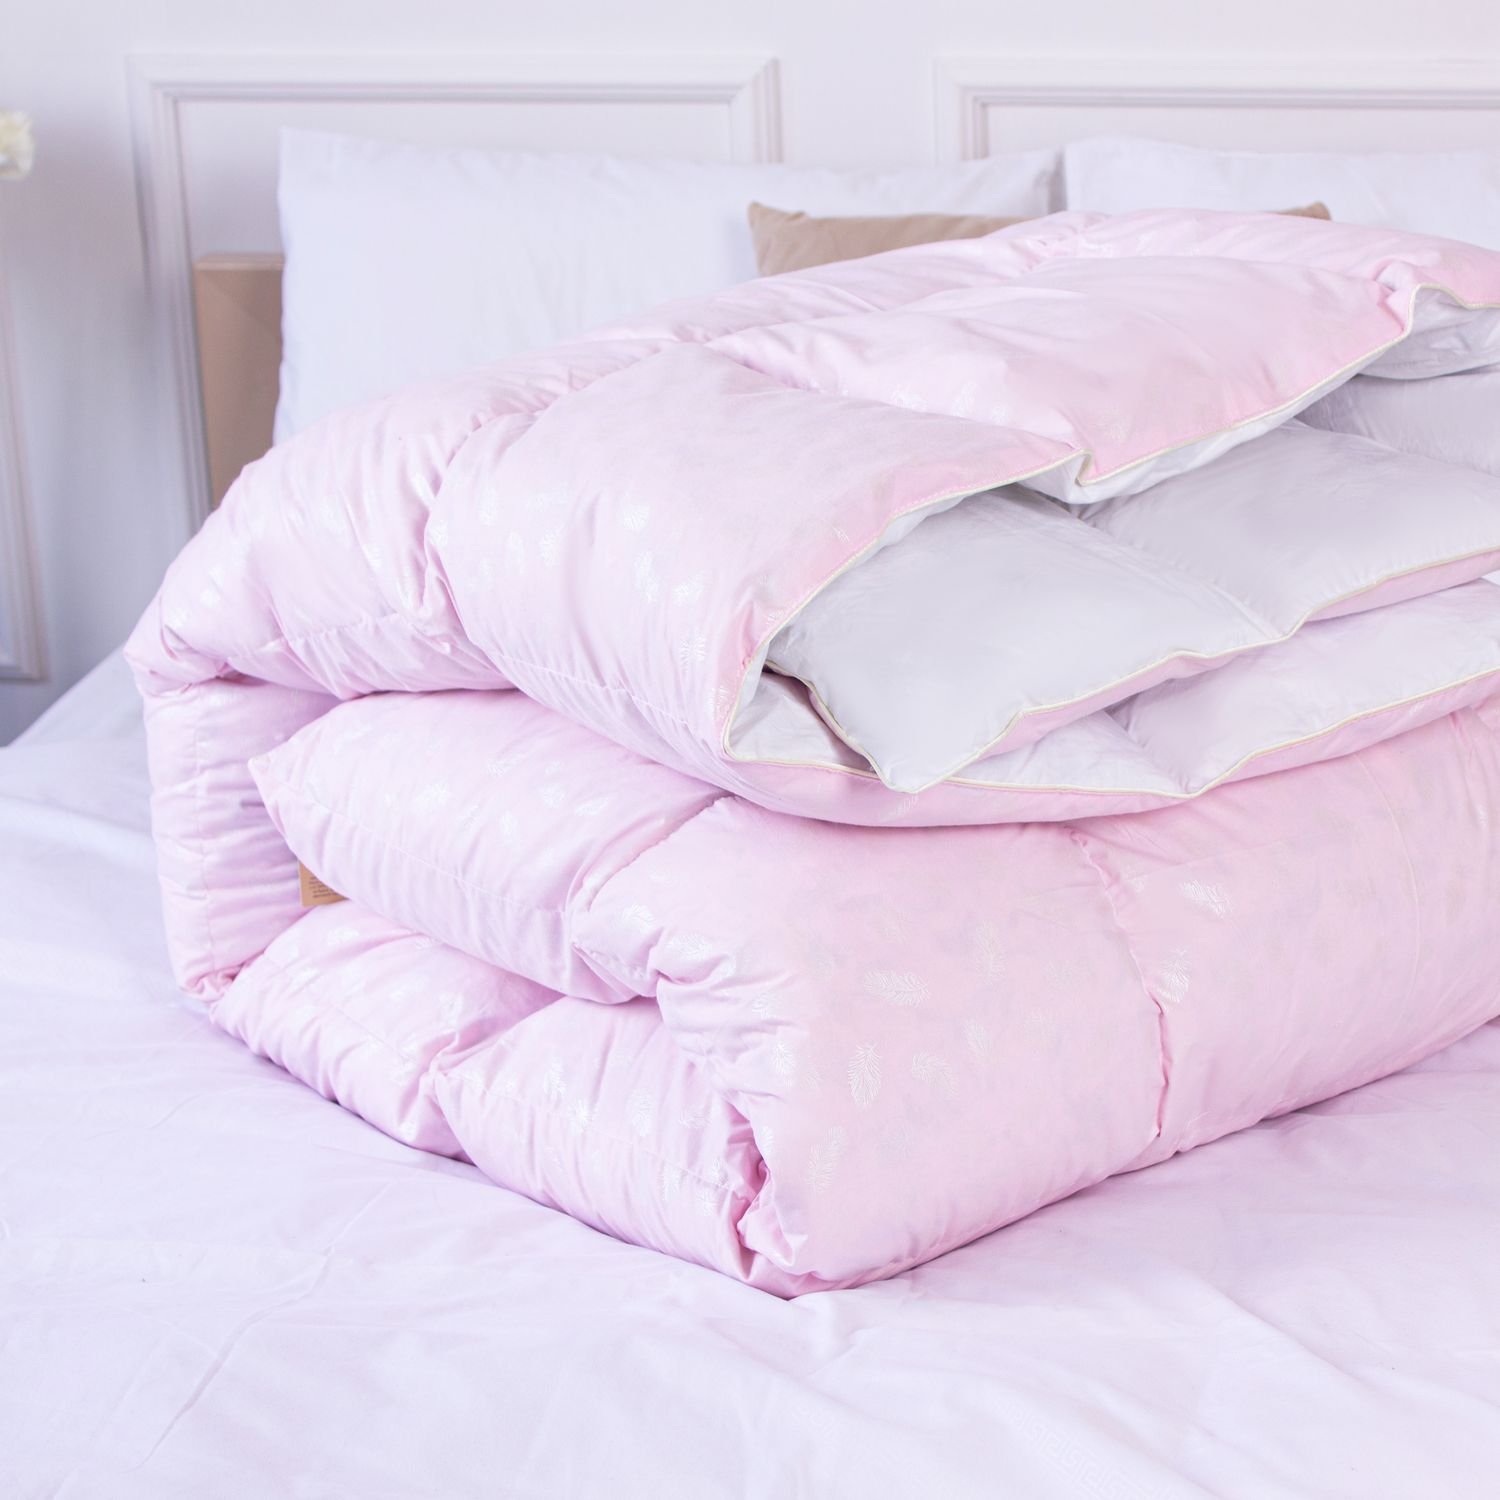 Одеяло пуховое MirSon Karmen №1829 Bio-Pink, 90% пух, полуторное, 205x140, розовое (2200003012934) - фото 3